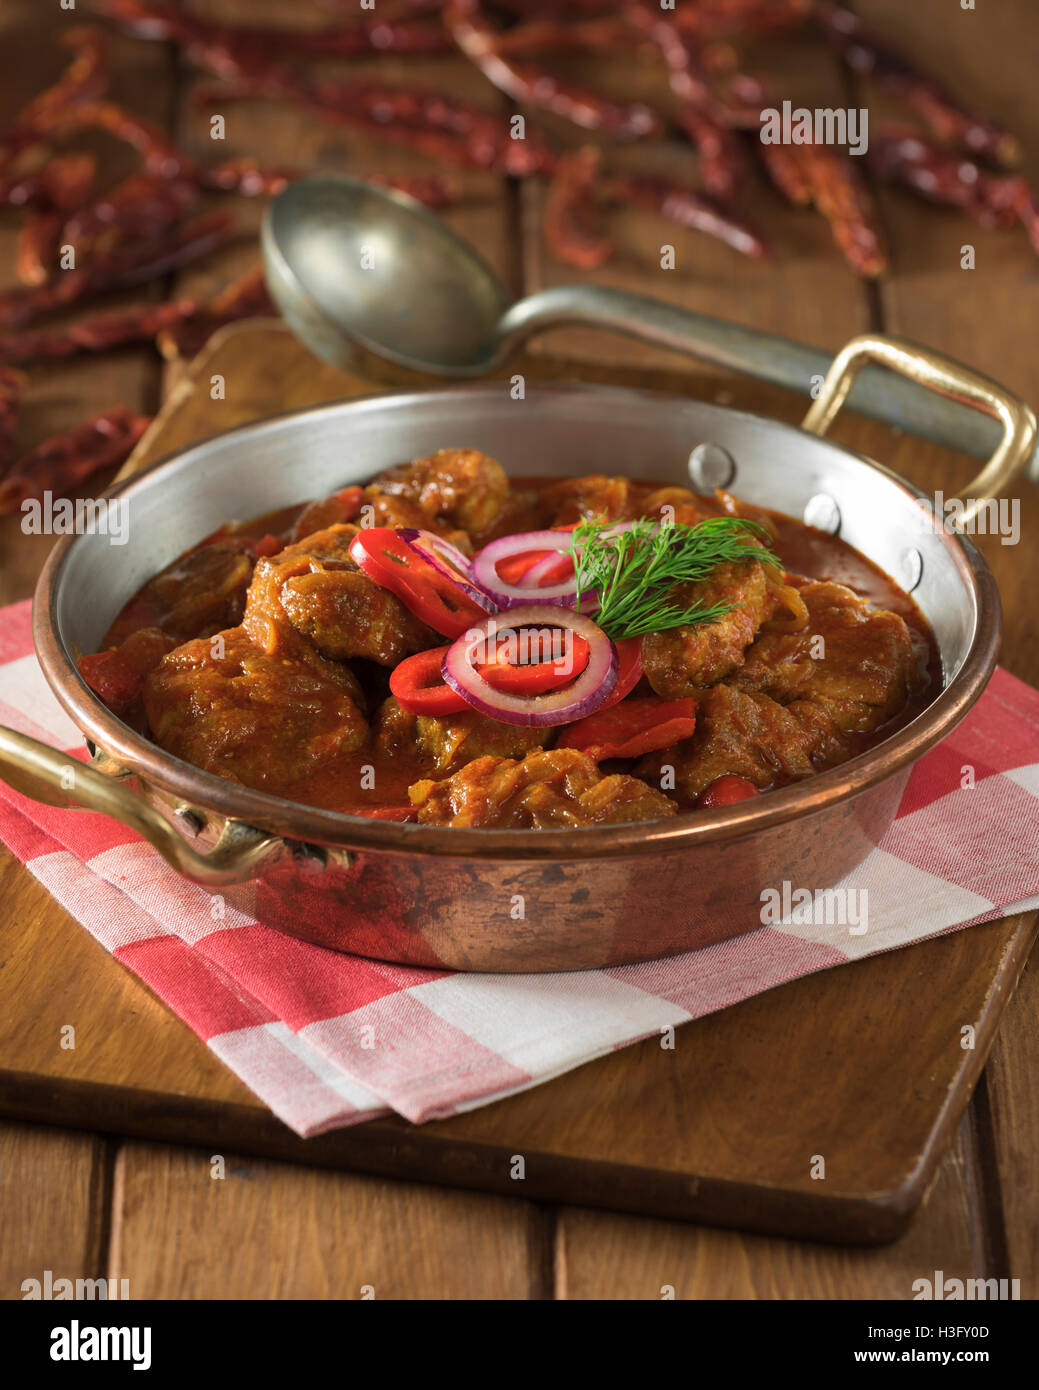 Pörkölt. Paprika meat stew. Hungary Food Stock Photo